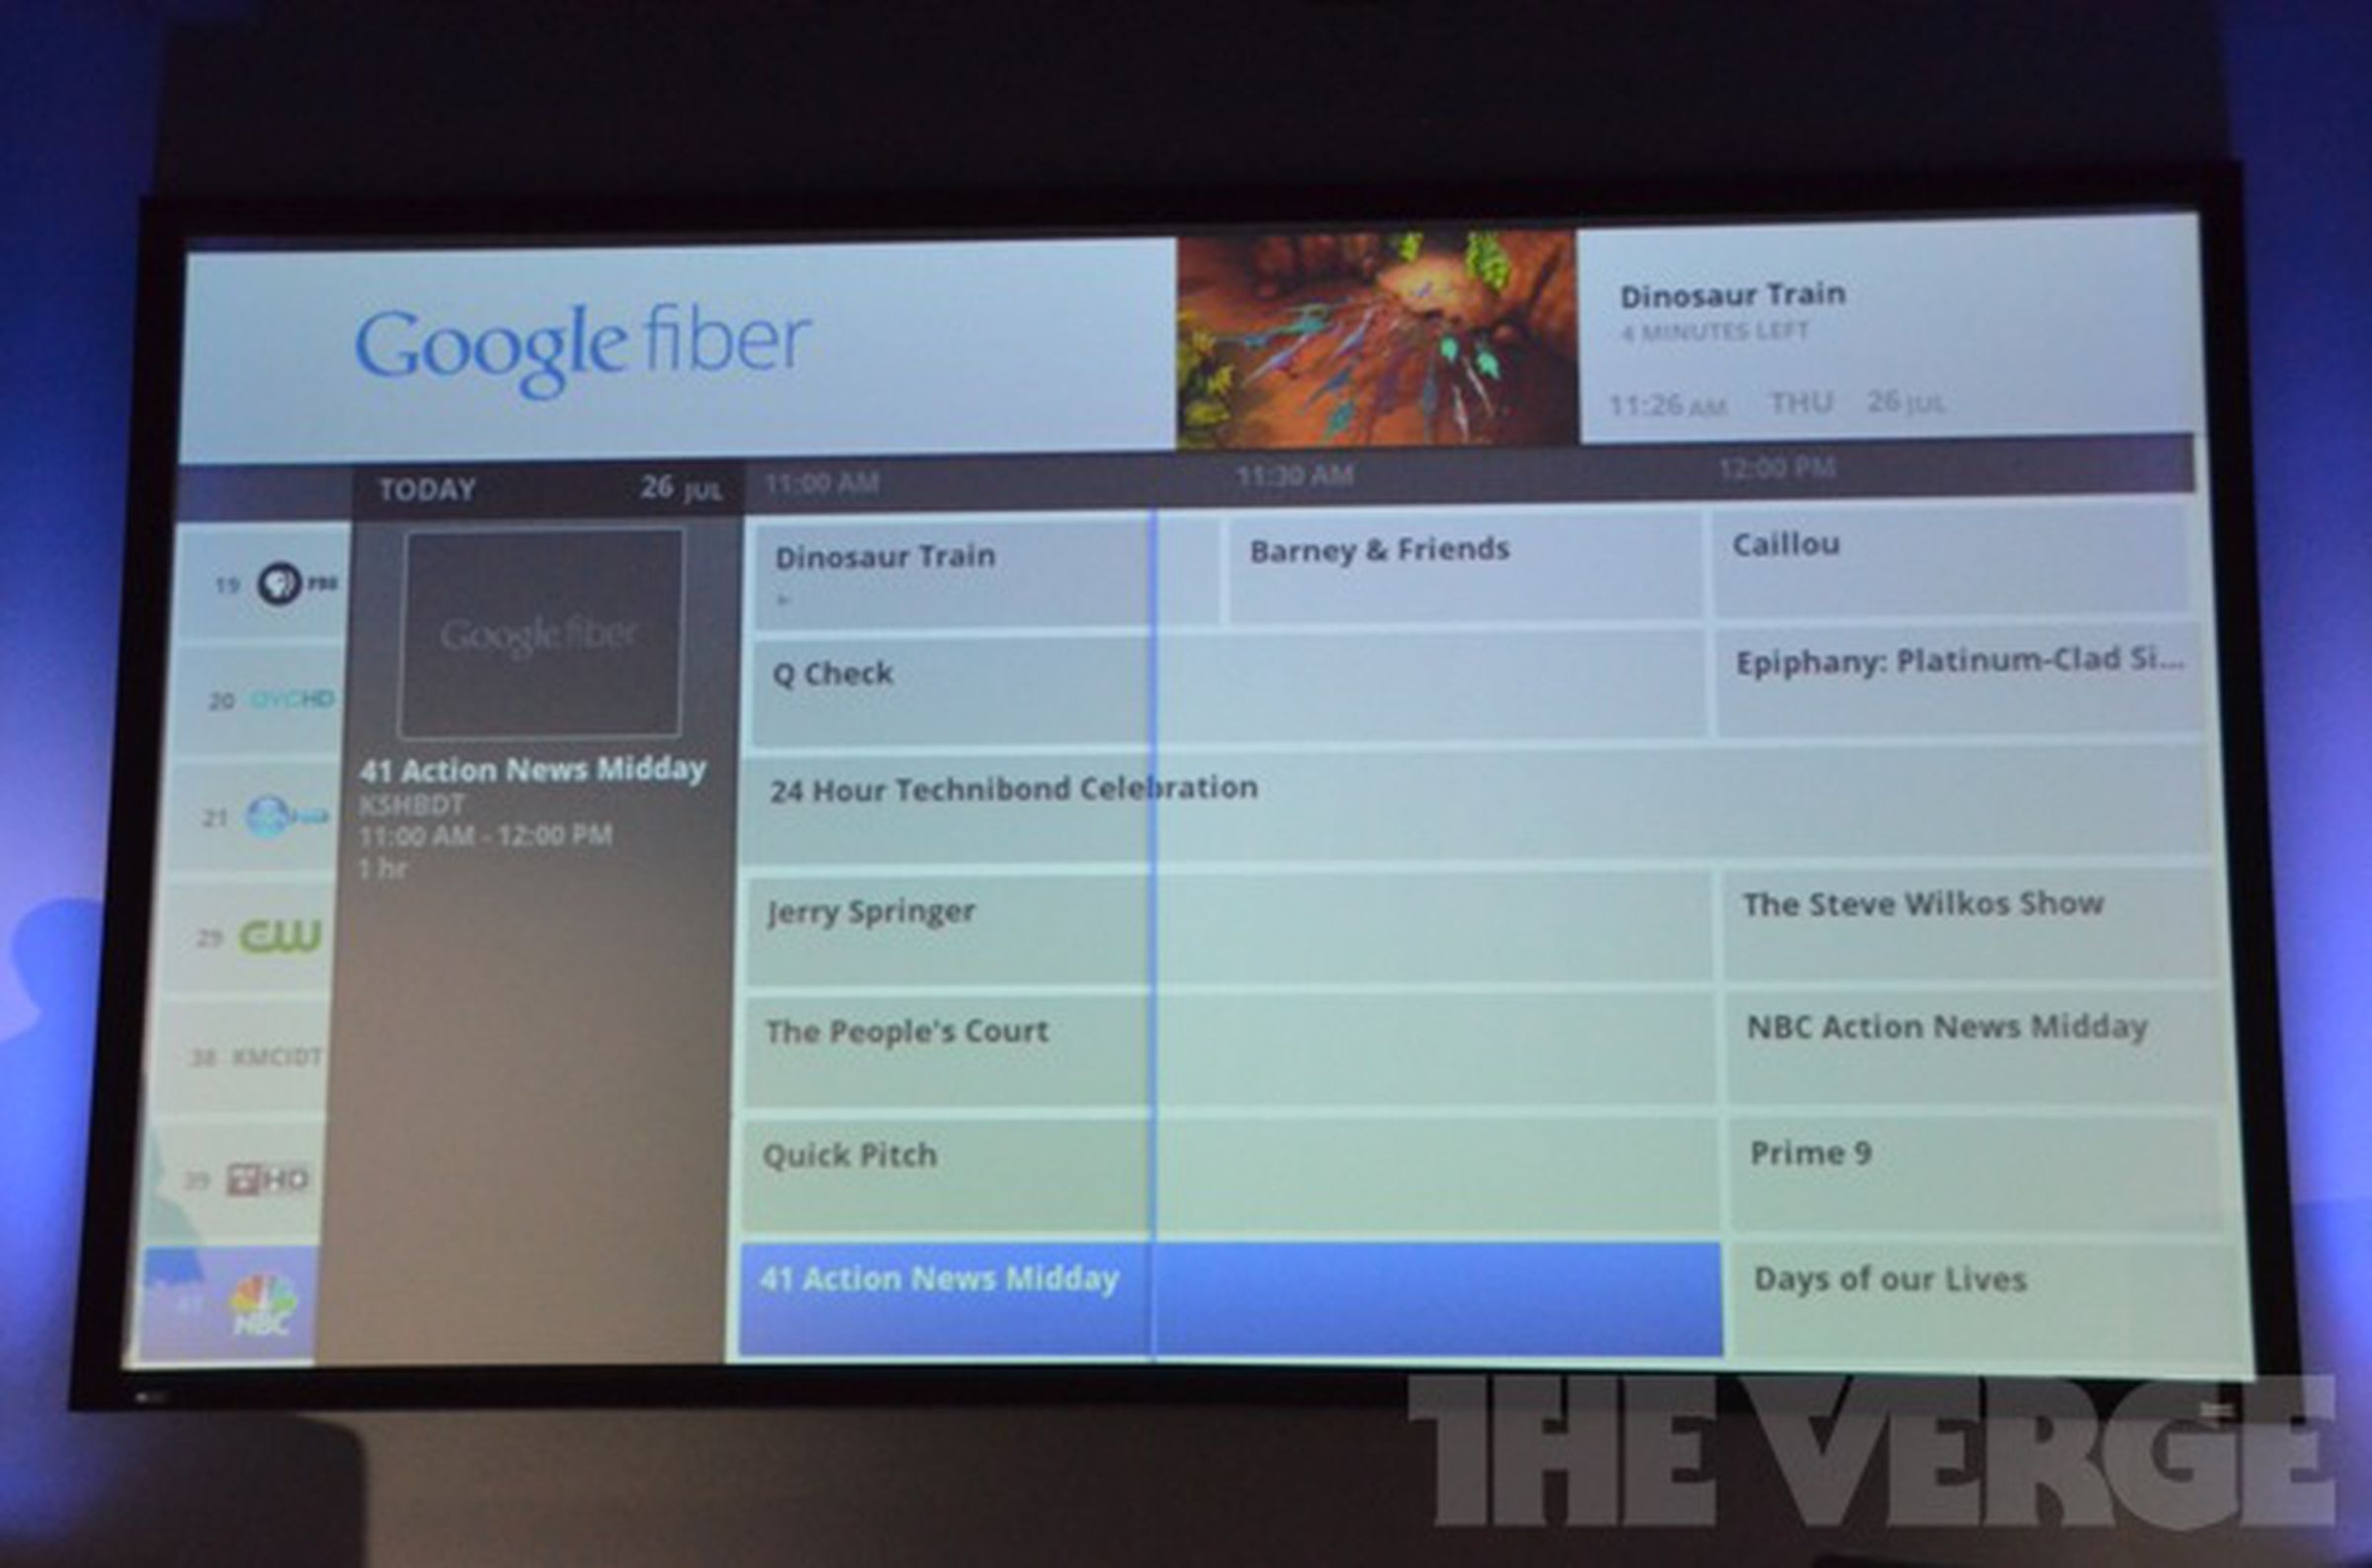 Google Fiber TV launch photos